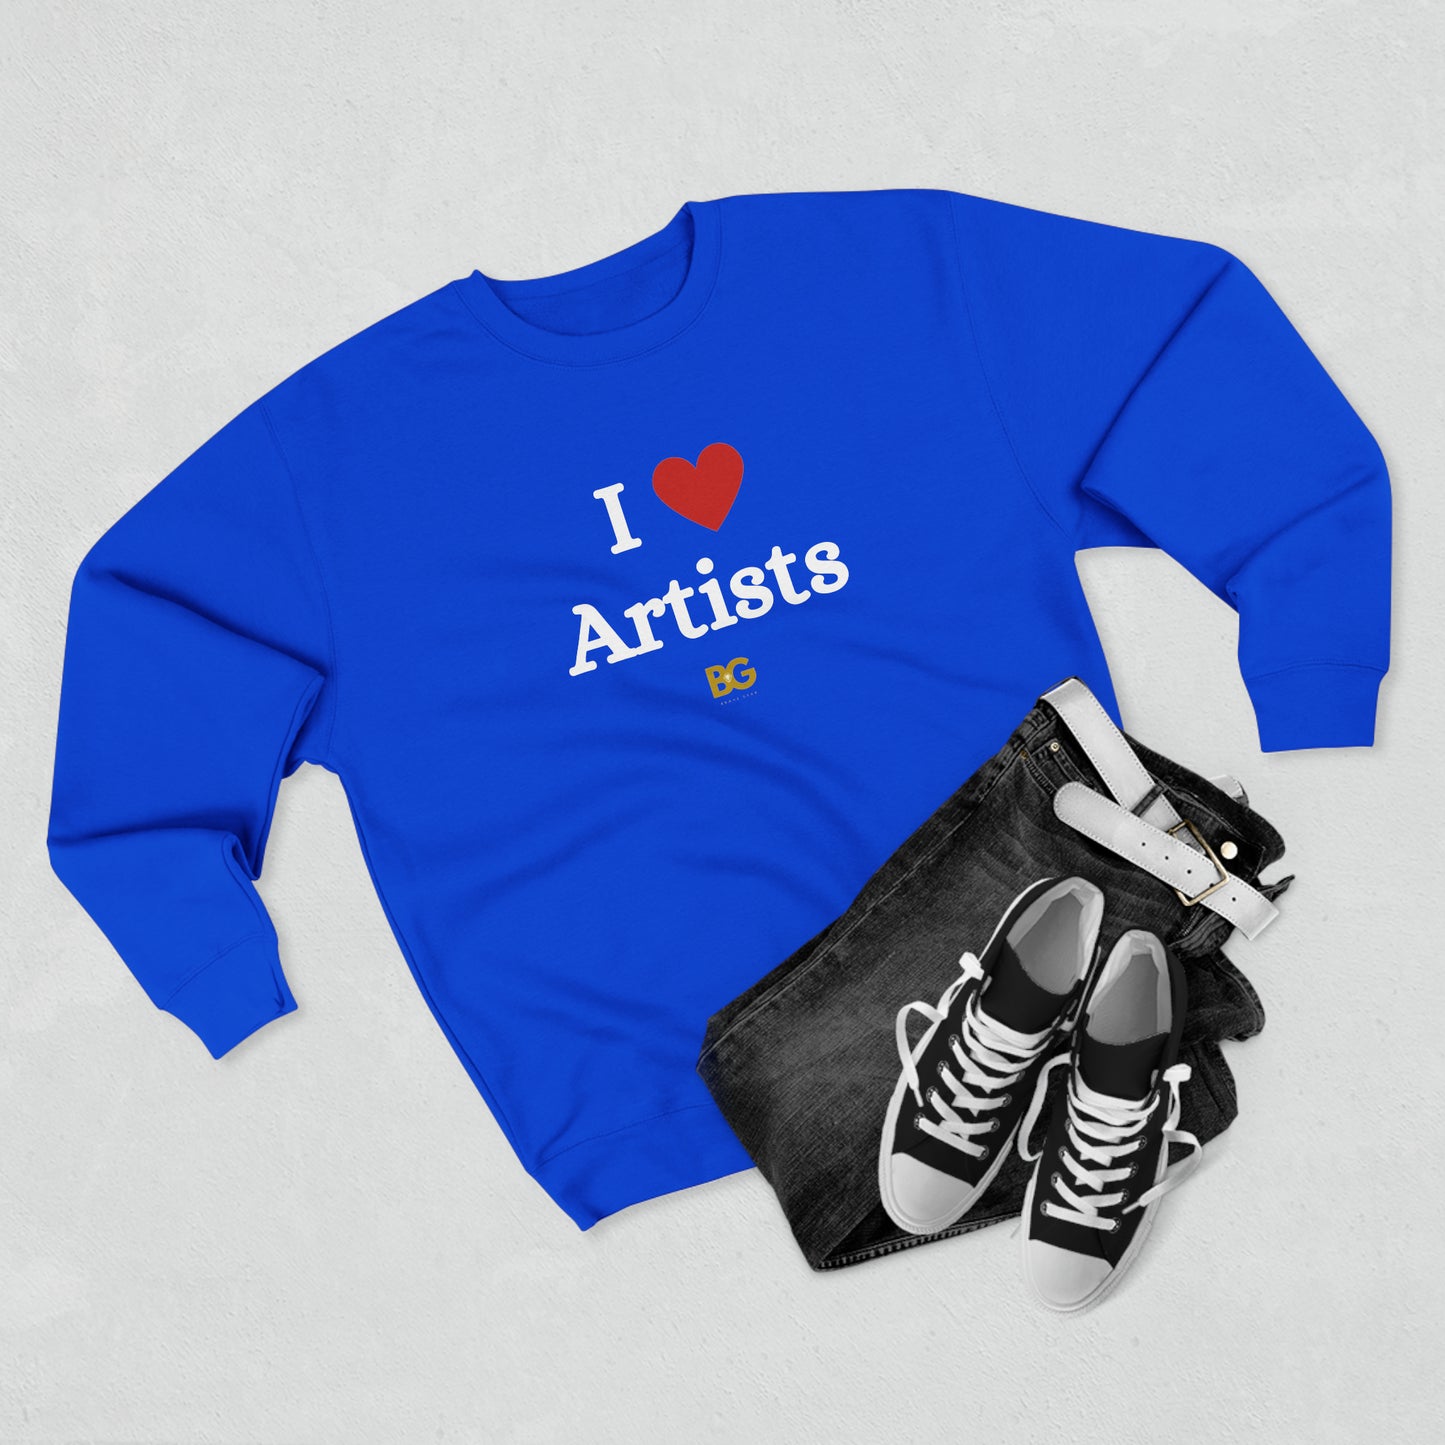 BG "I ❤️ Artists" Premium Crewneck Sweatshirt